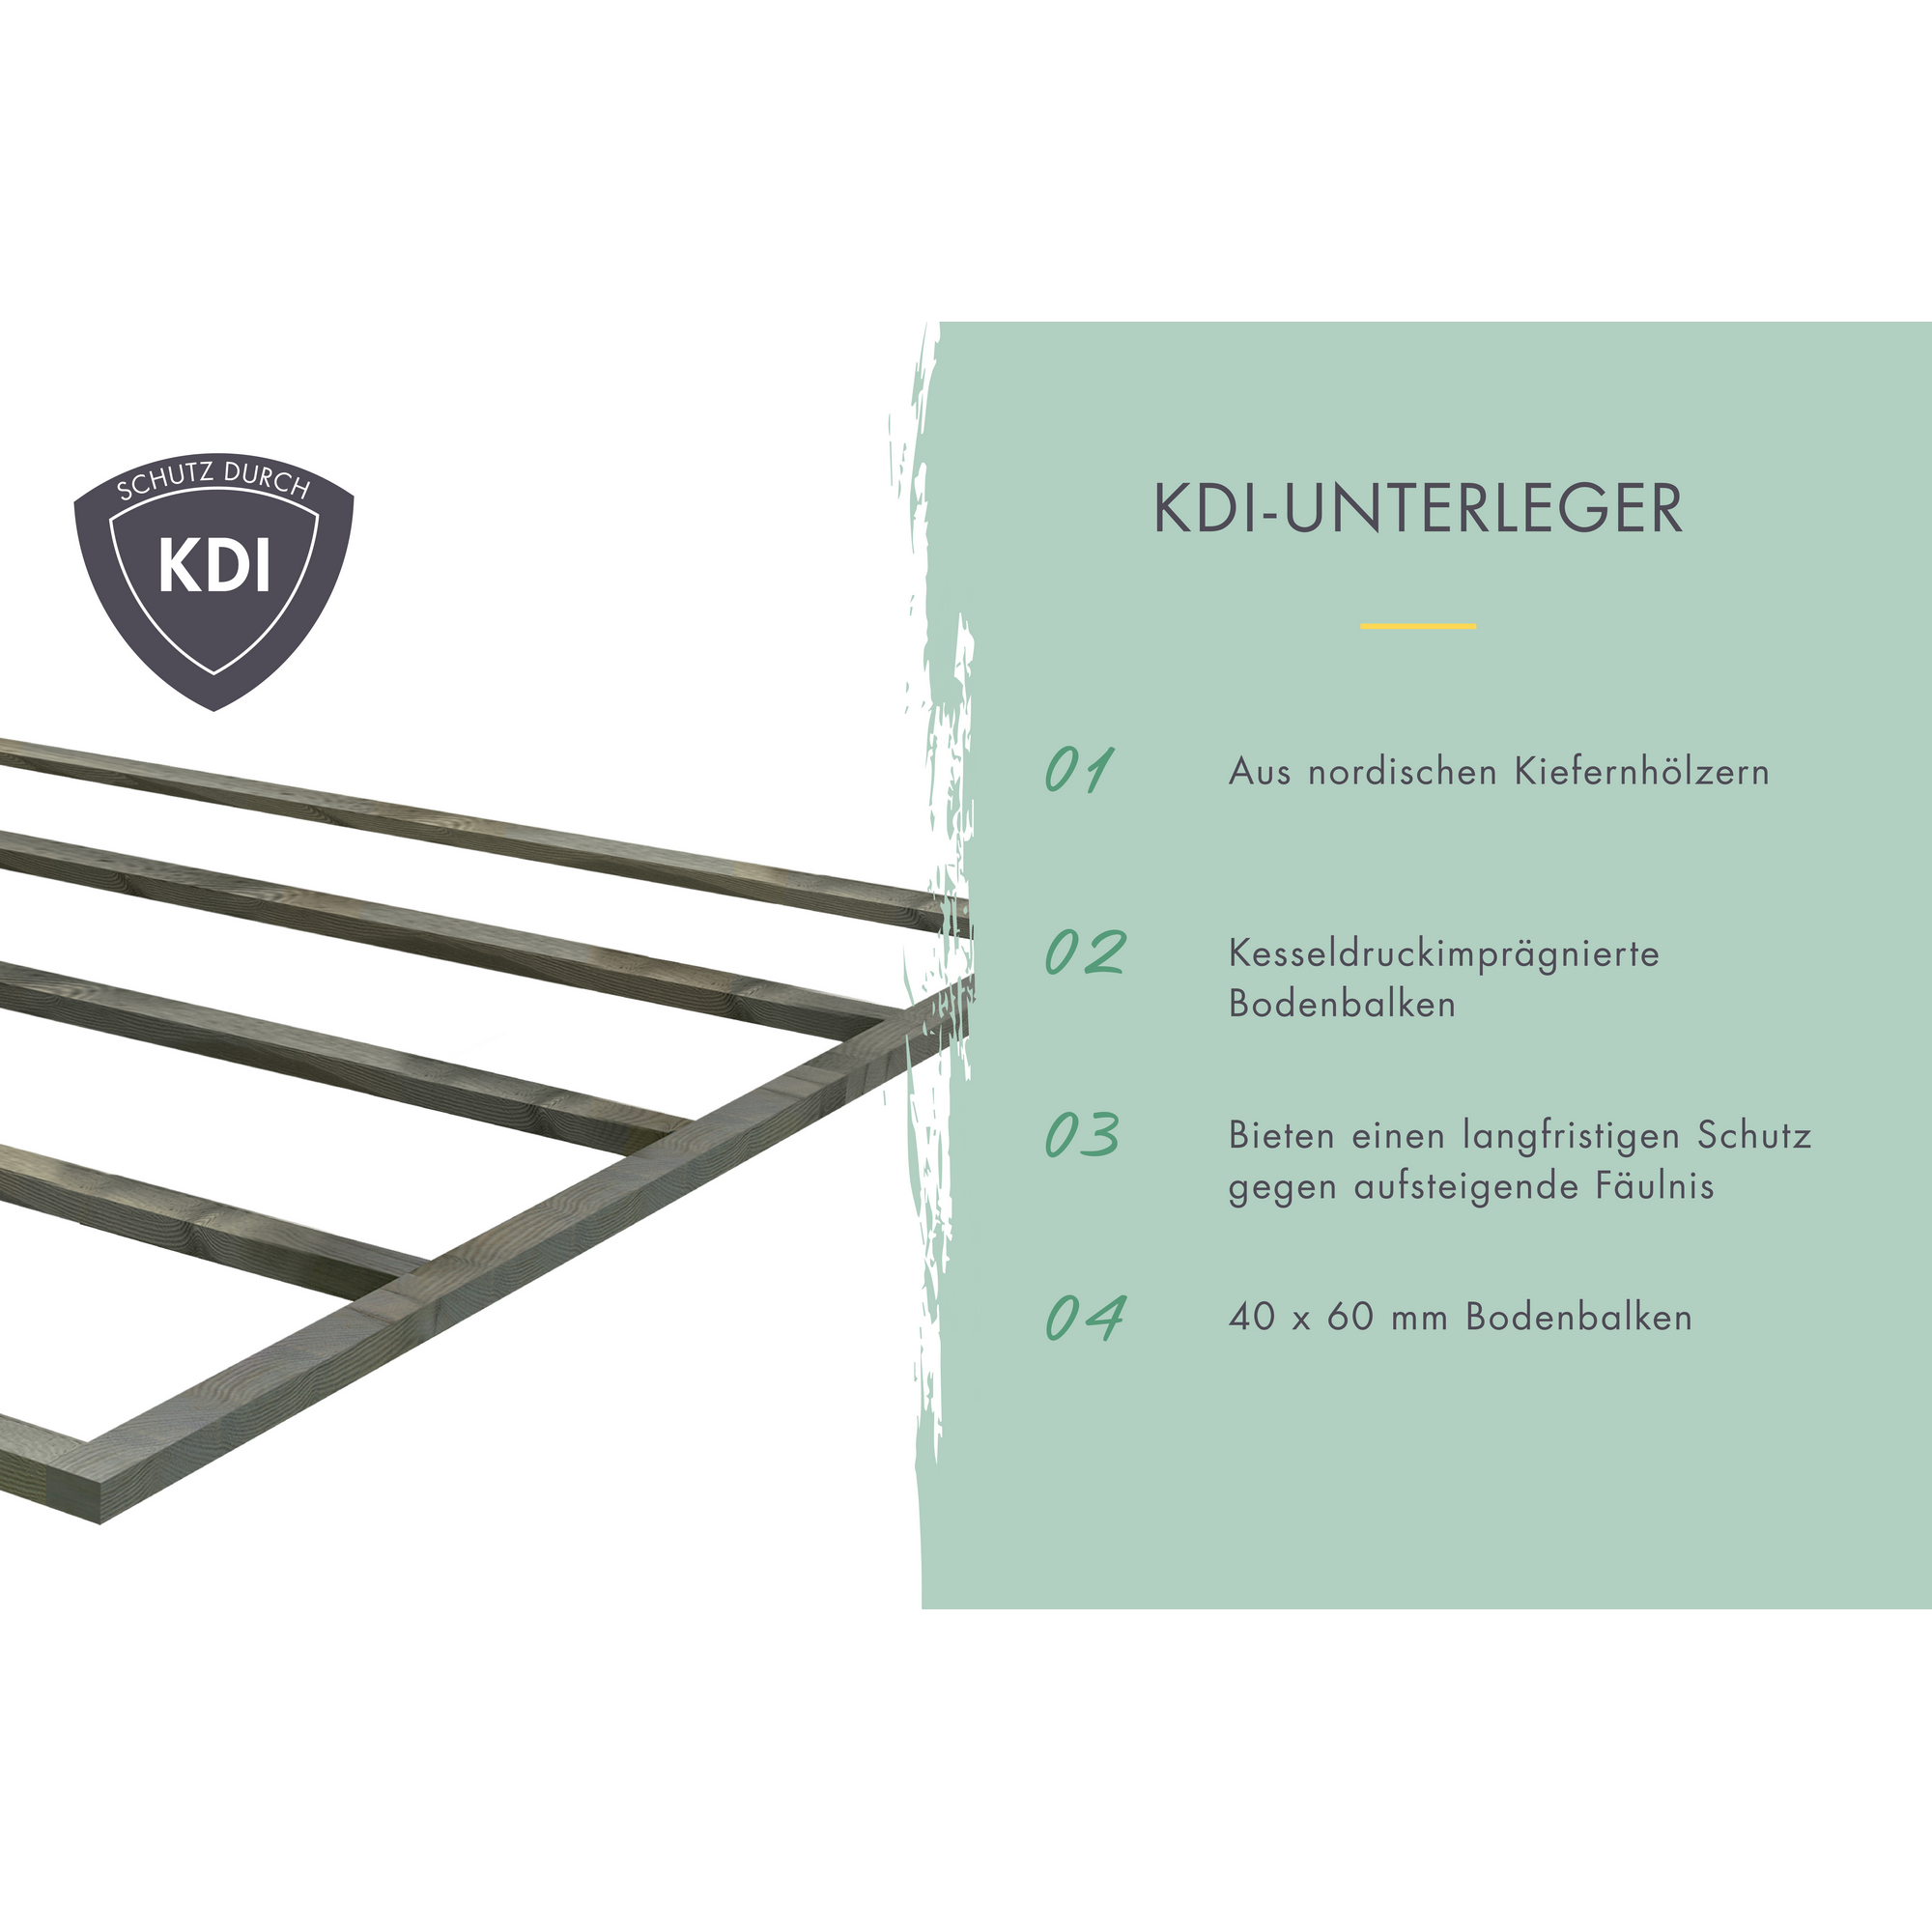 Gartenhaus-Set 'Kombo' naturbelassen 300 x 196,5 x 186 cm mit Pultdach, Schrank und Anbaudach + product picture